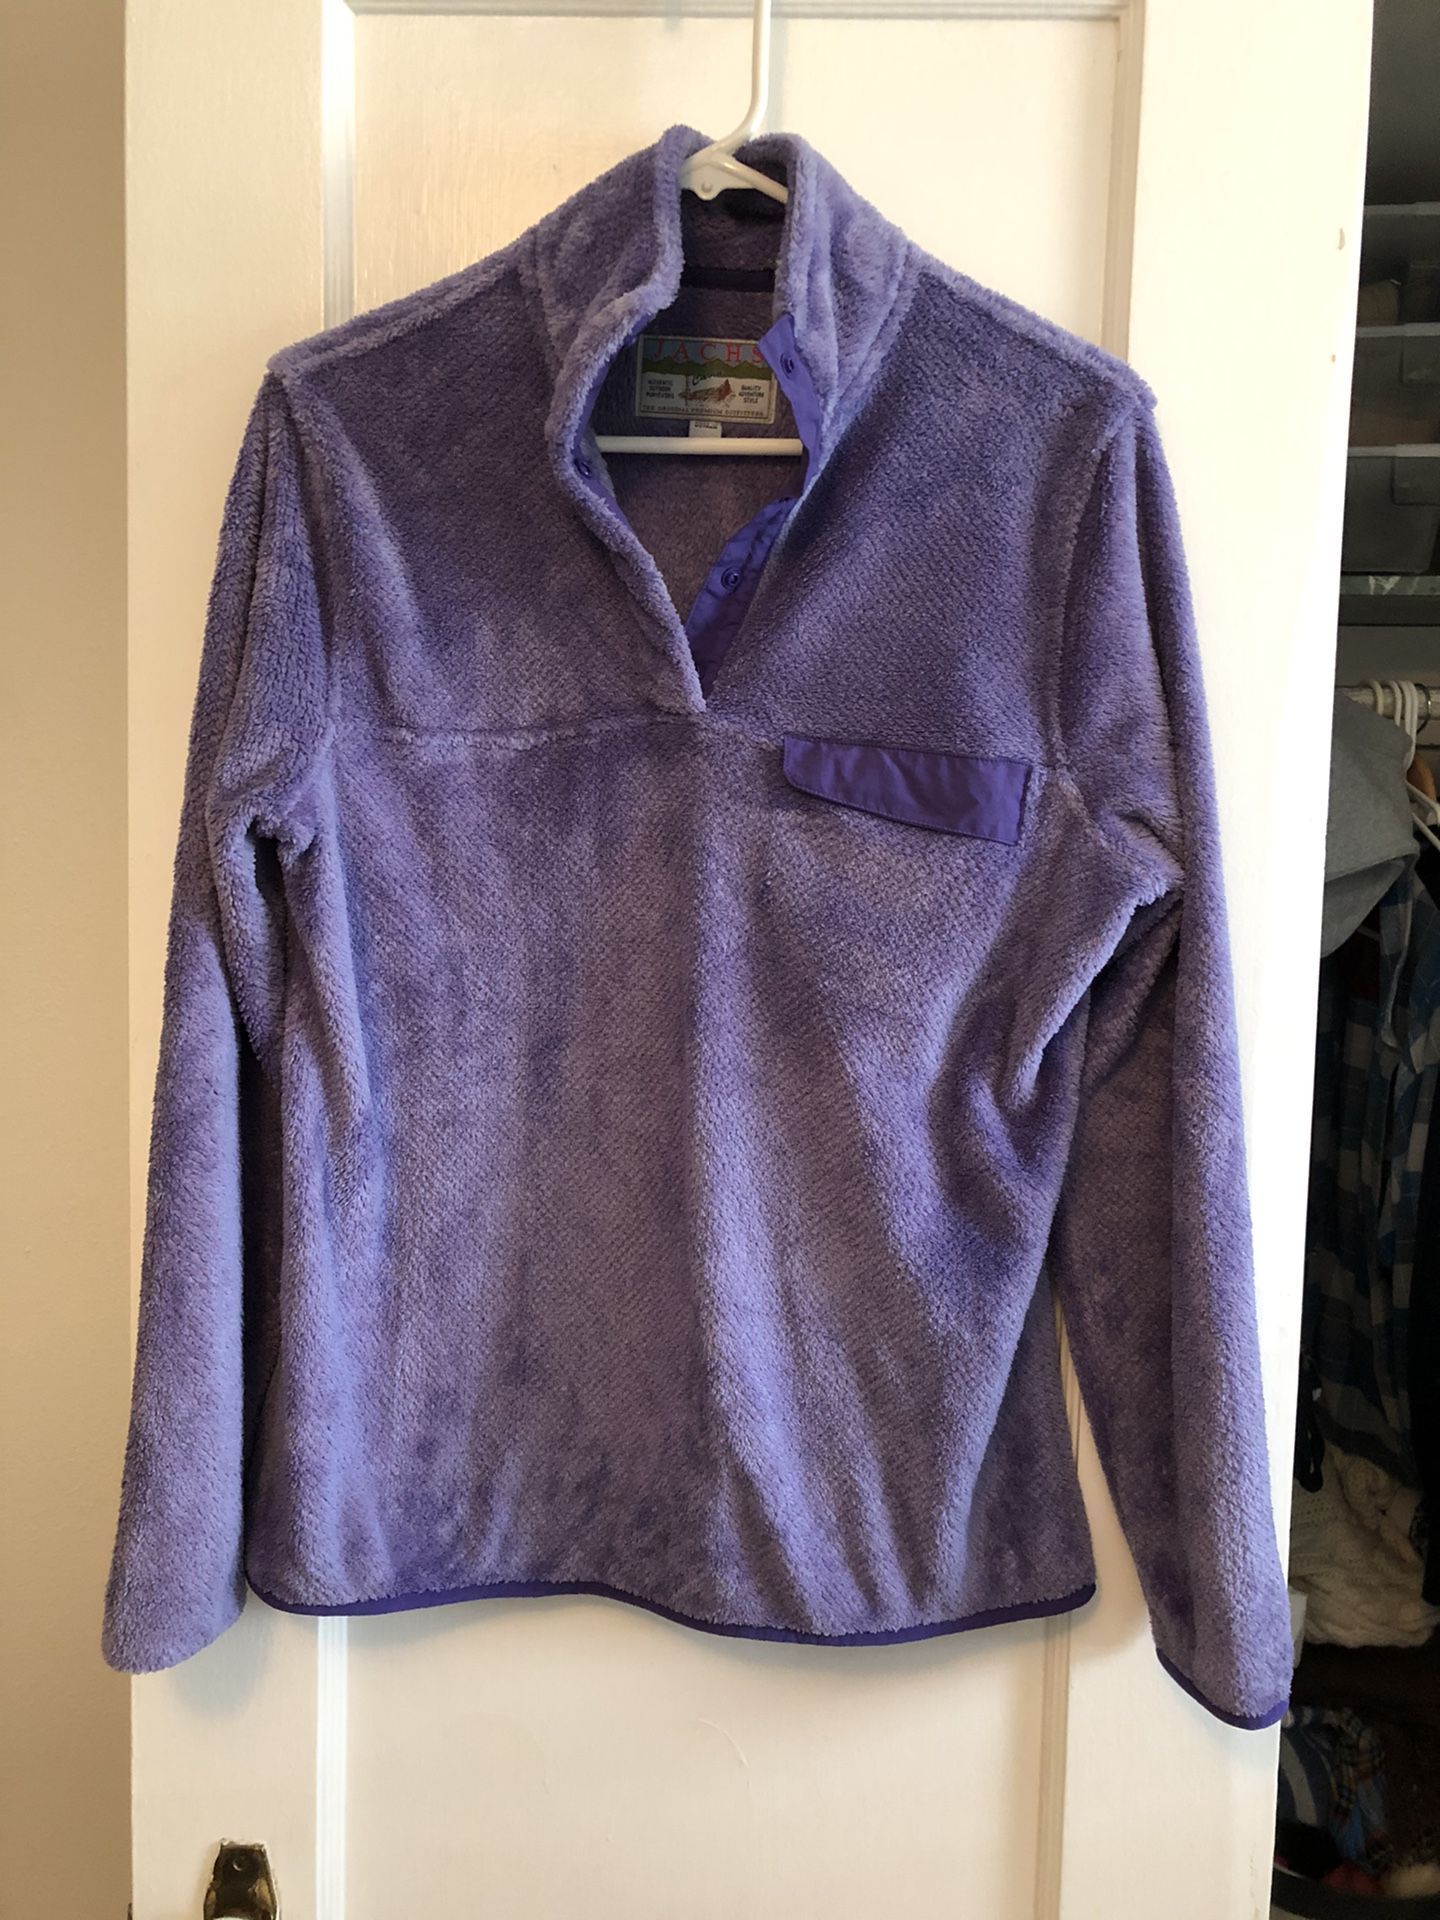 Purple Patagonia type pullover sweatshirt - woman’s size xsmall/small